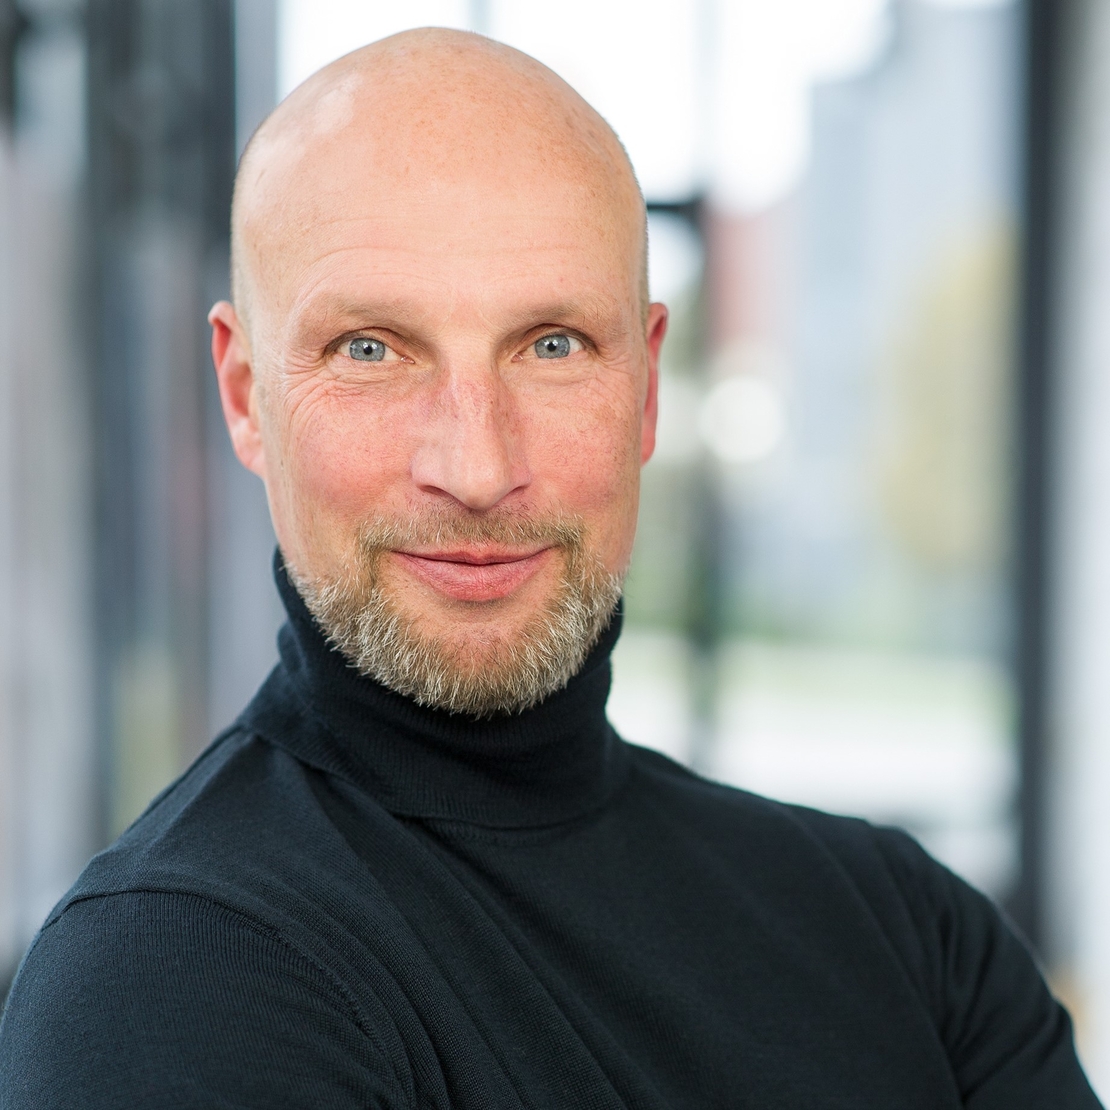 Portraitbild von Raoul Haagen, Senior IT Consultant, novaCapta GmbH